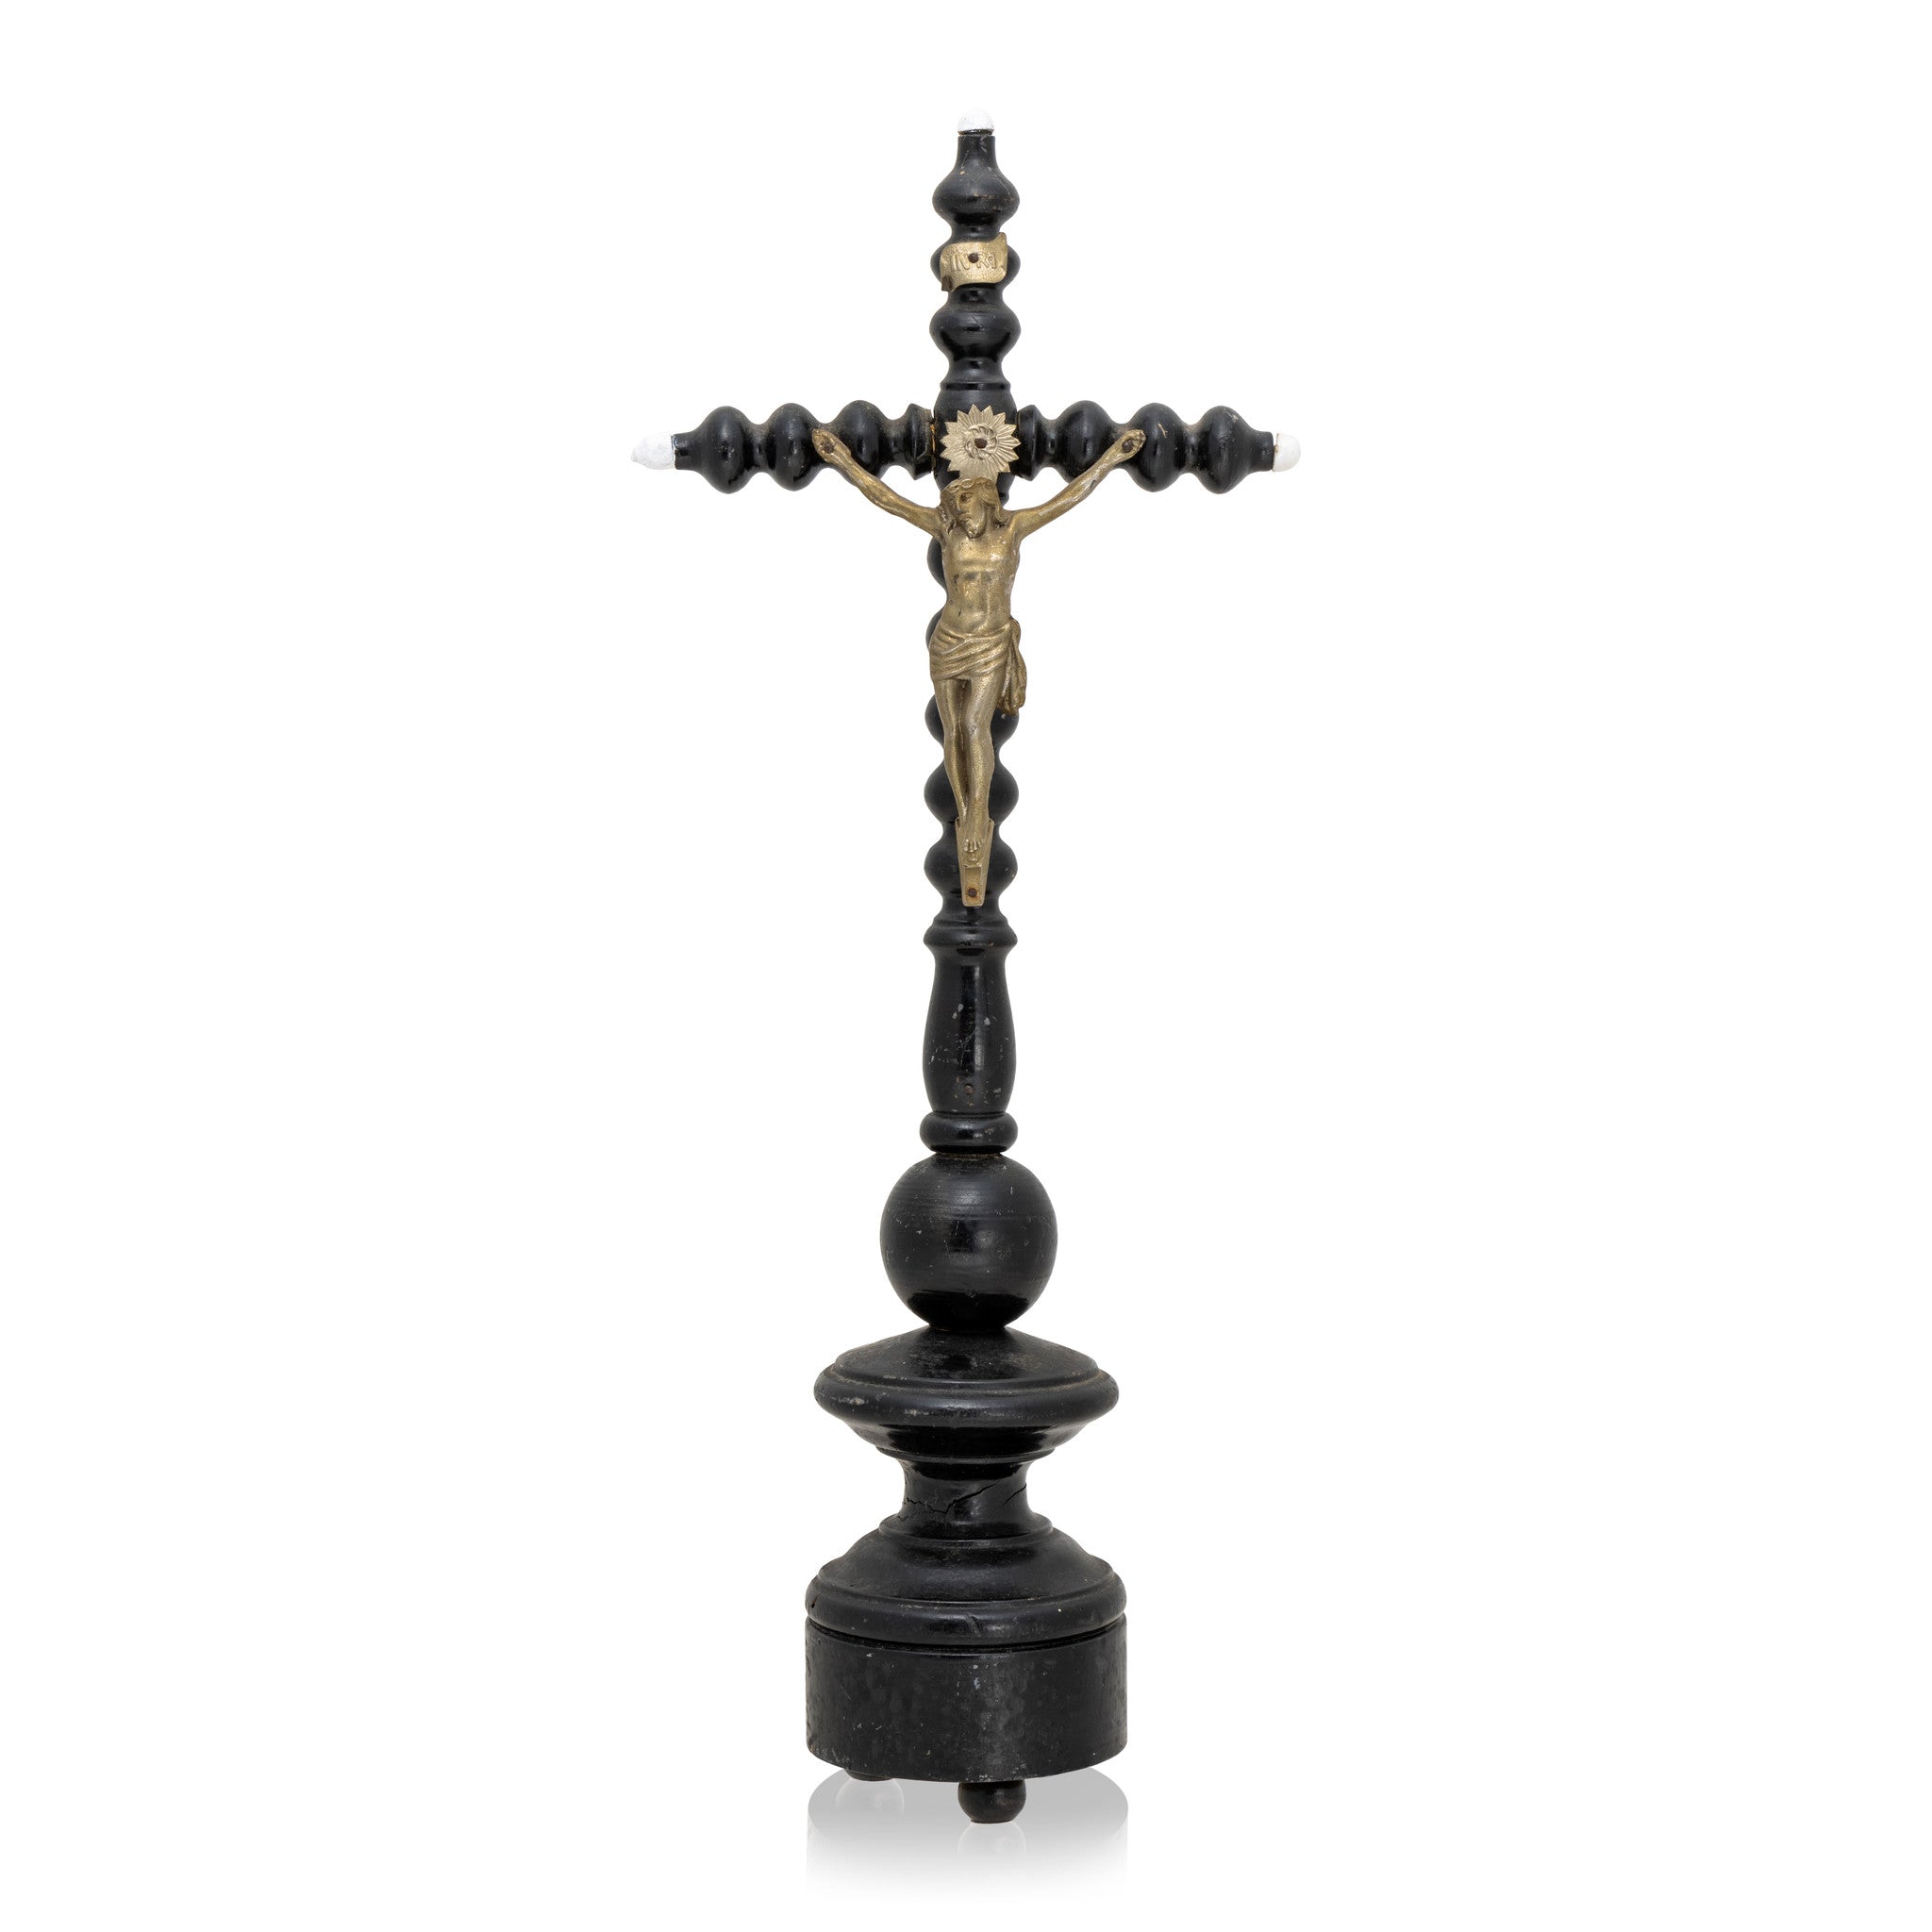 Spooled Crucifix, Furnishings, Decor, Religious Item